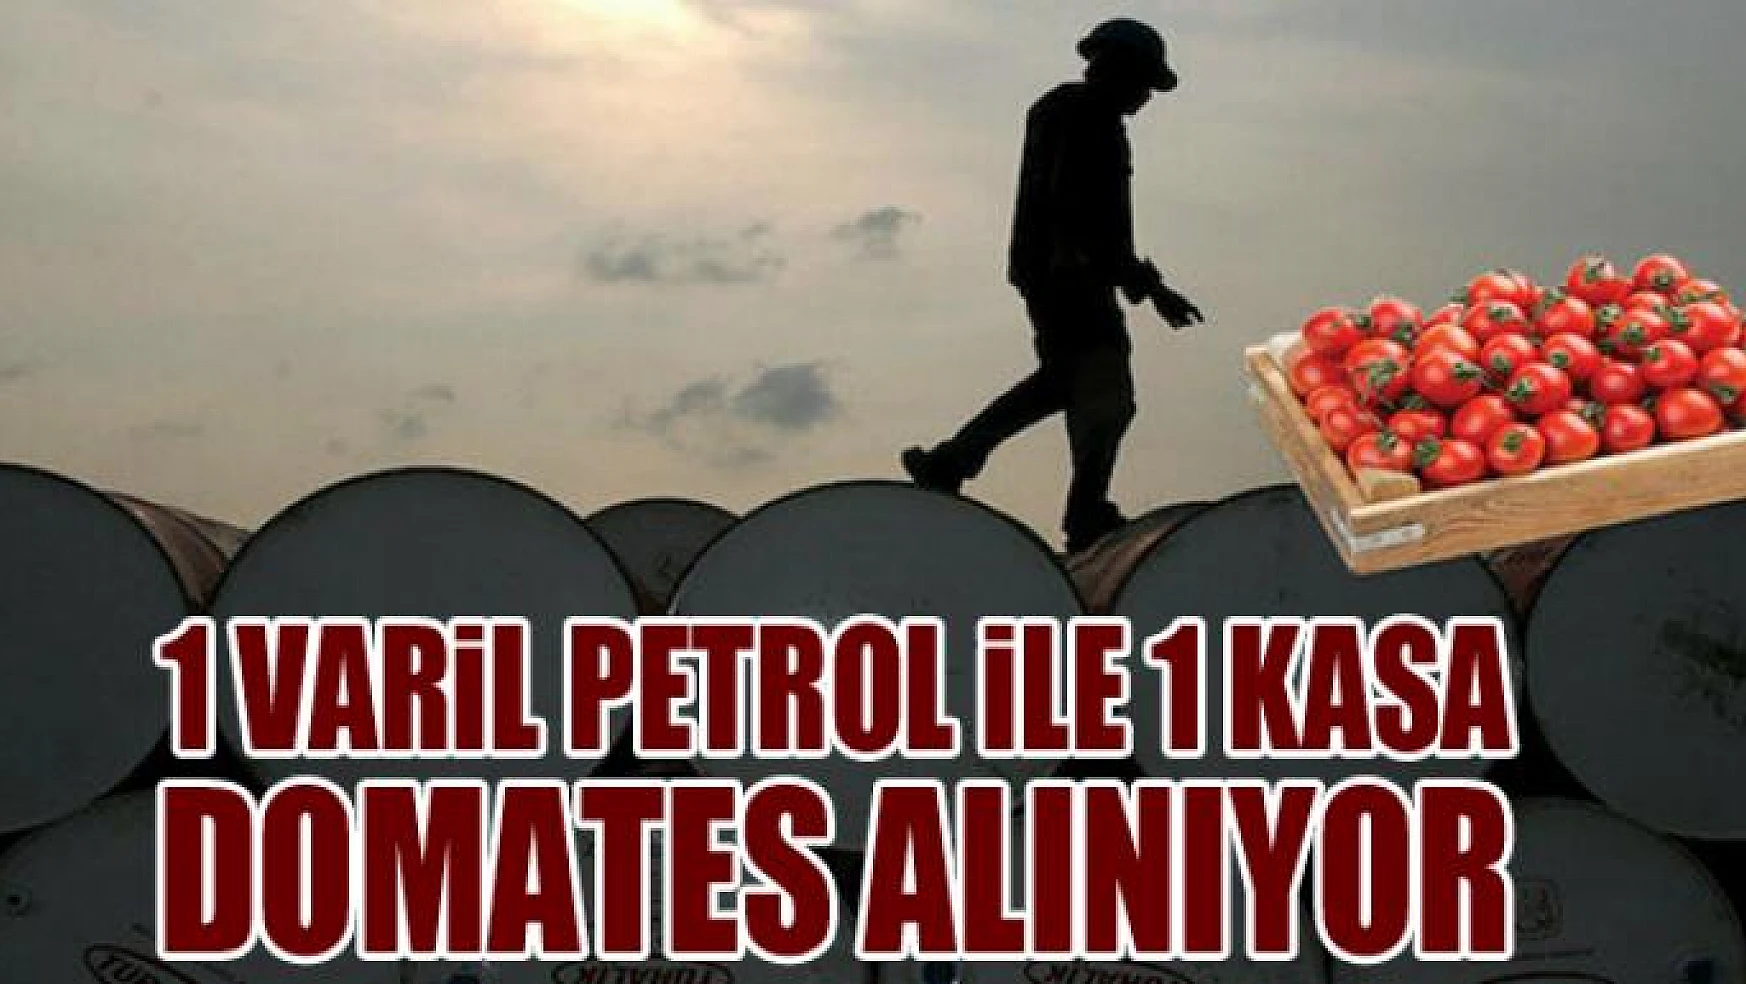 Rusya'ya petrol darbesi: 1 varil petrol ile 1 kasa domates alınıyor